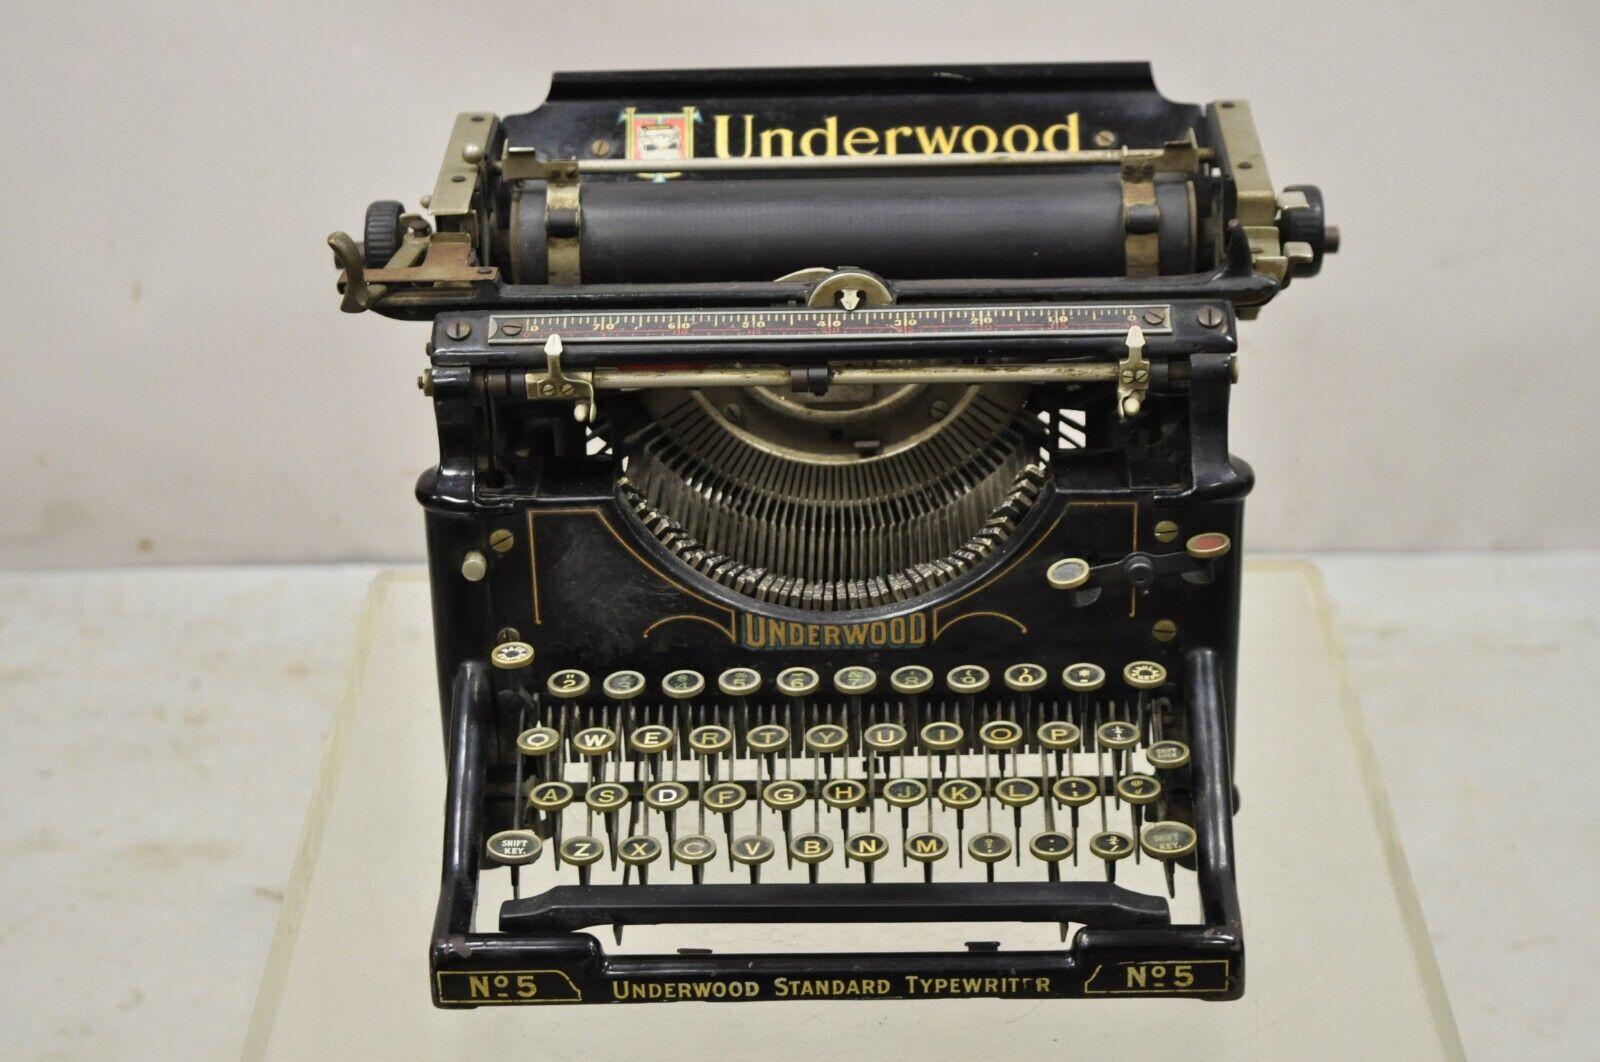 Antique Vintage Underwood No 5 Standard Typewriter Black Art Deco Display. Circa Early 1900s. Measurements: 9